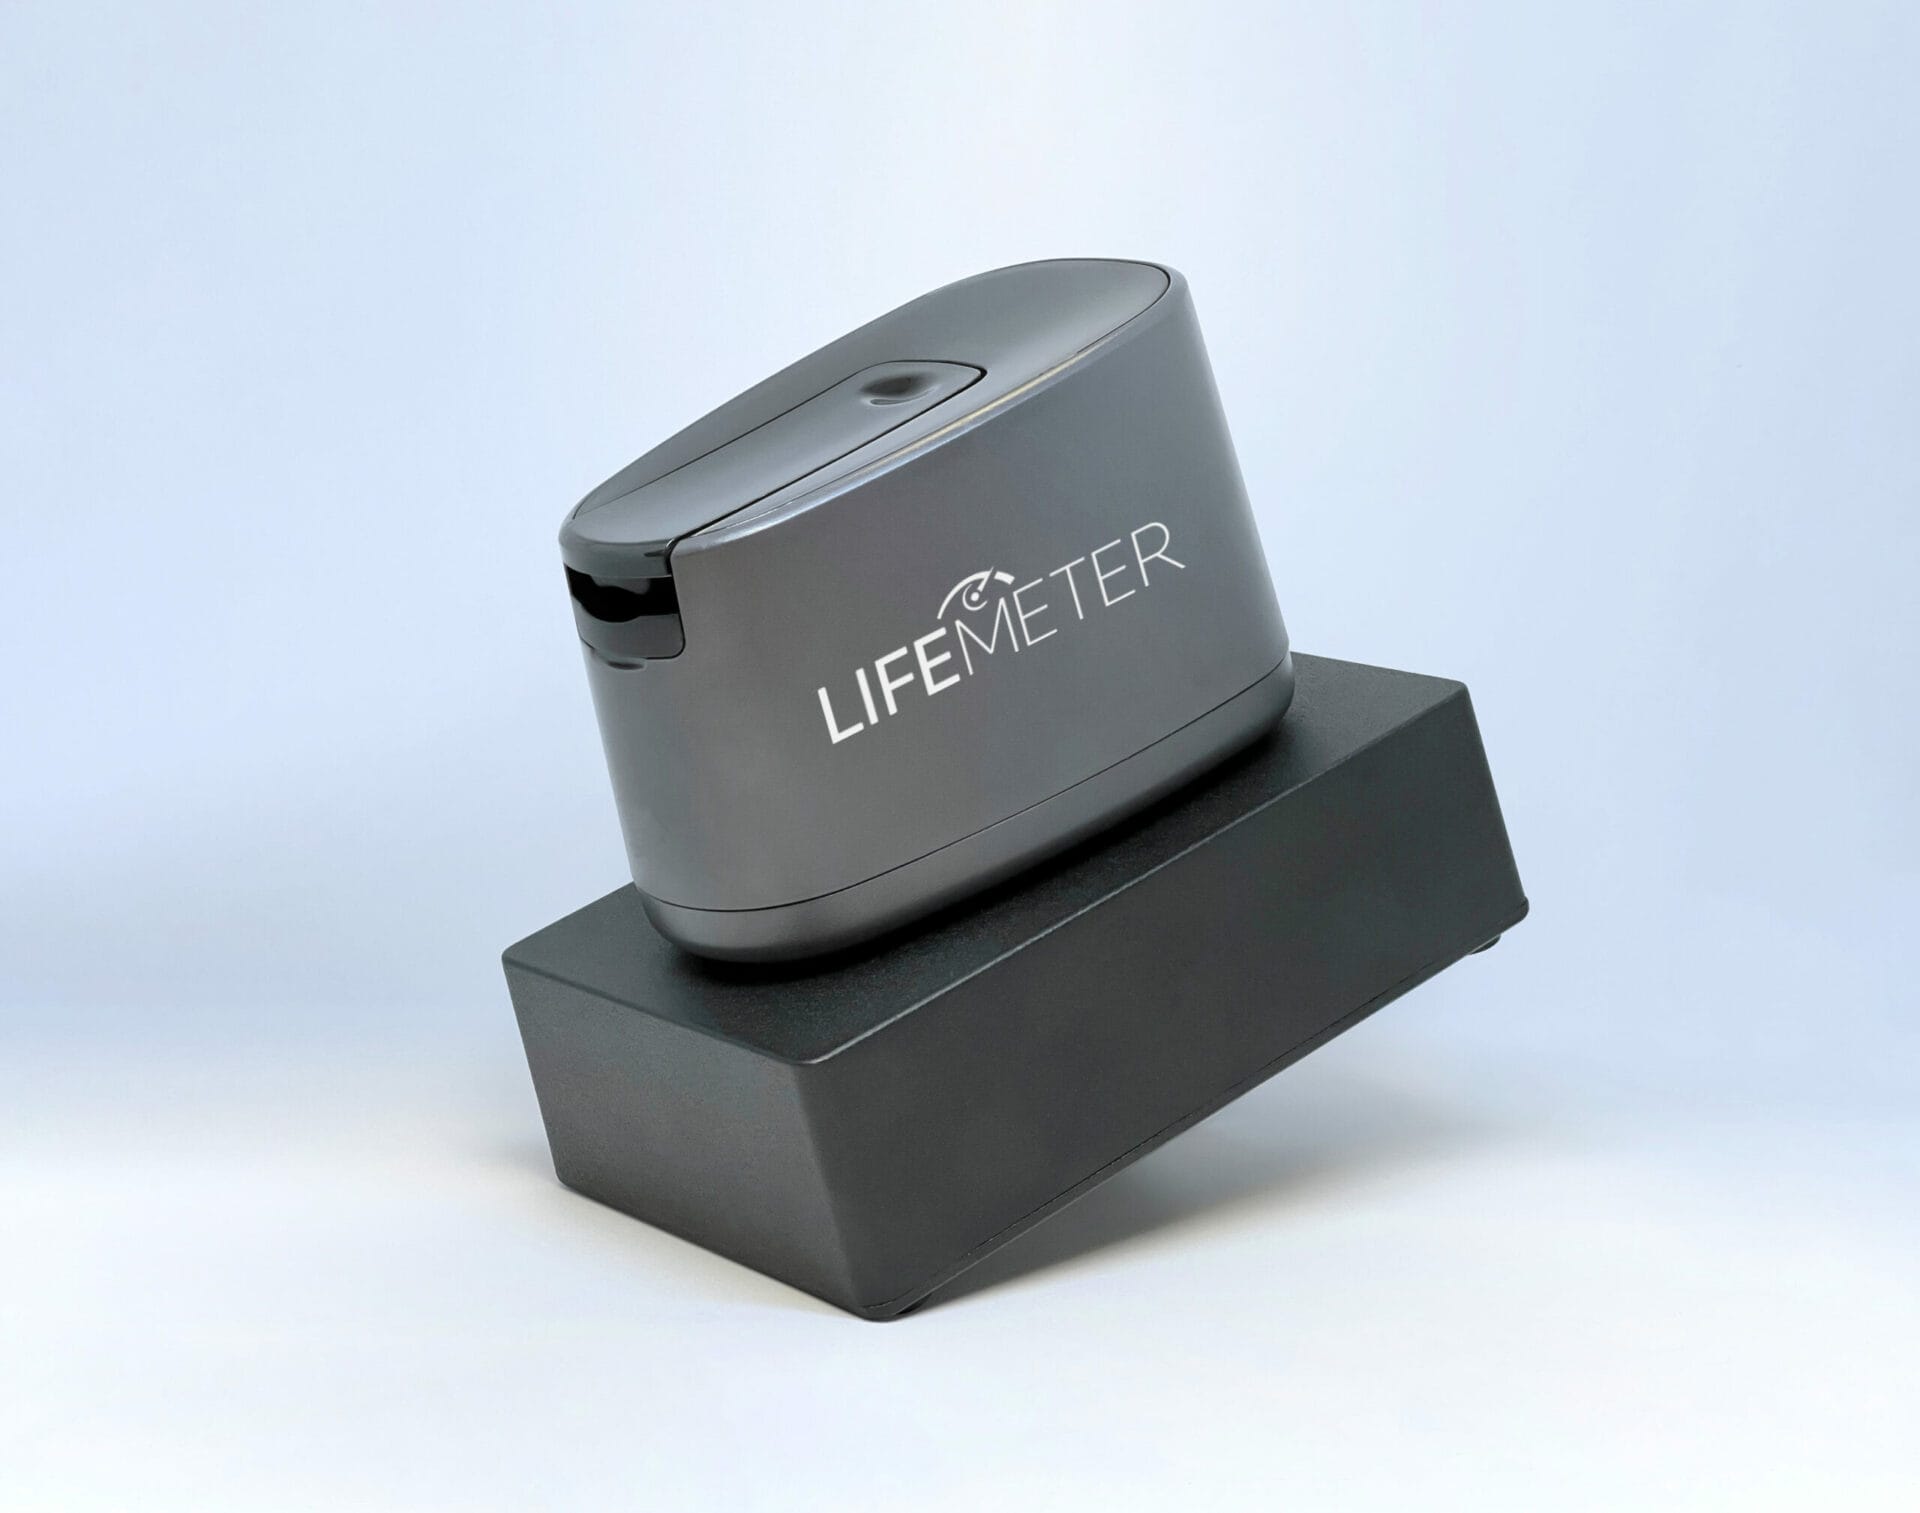 LifeMeter portable, non-invasive device to measure carotenoid levels